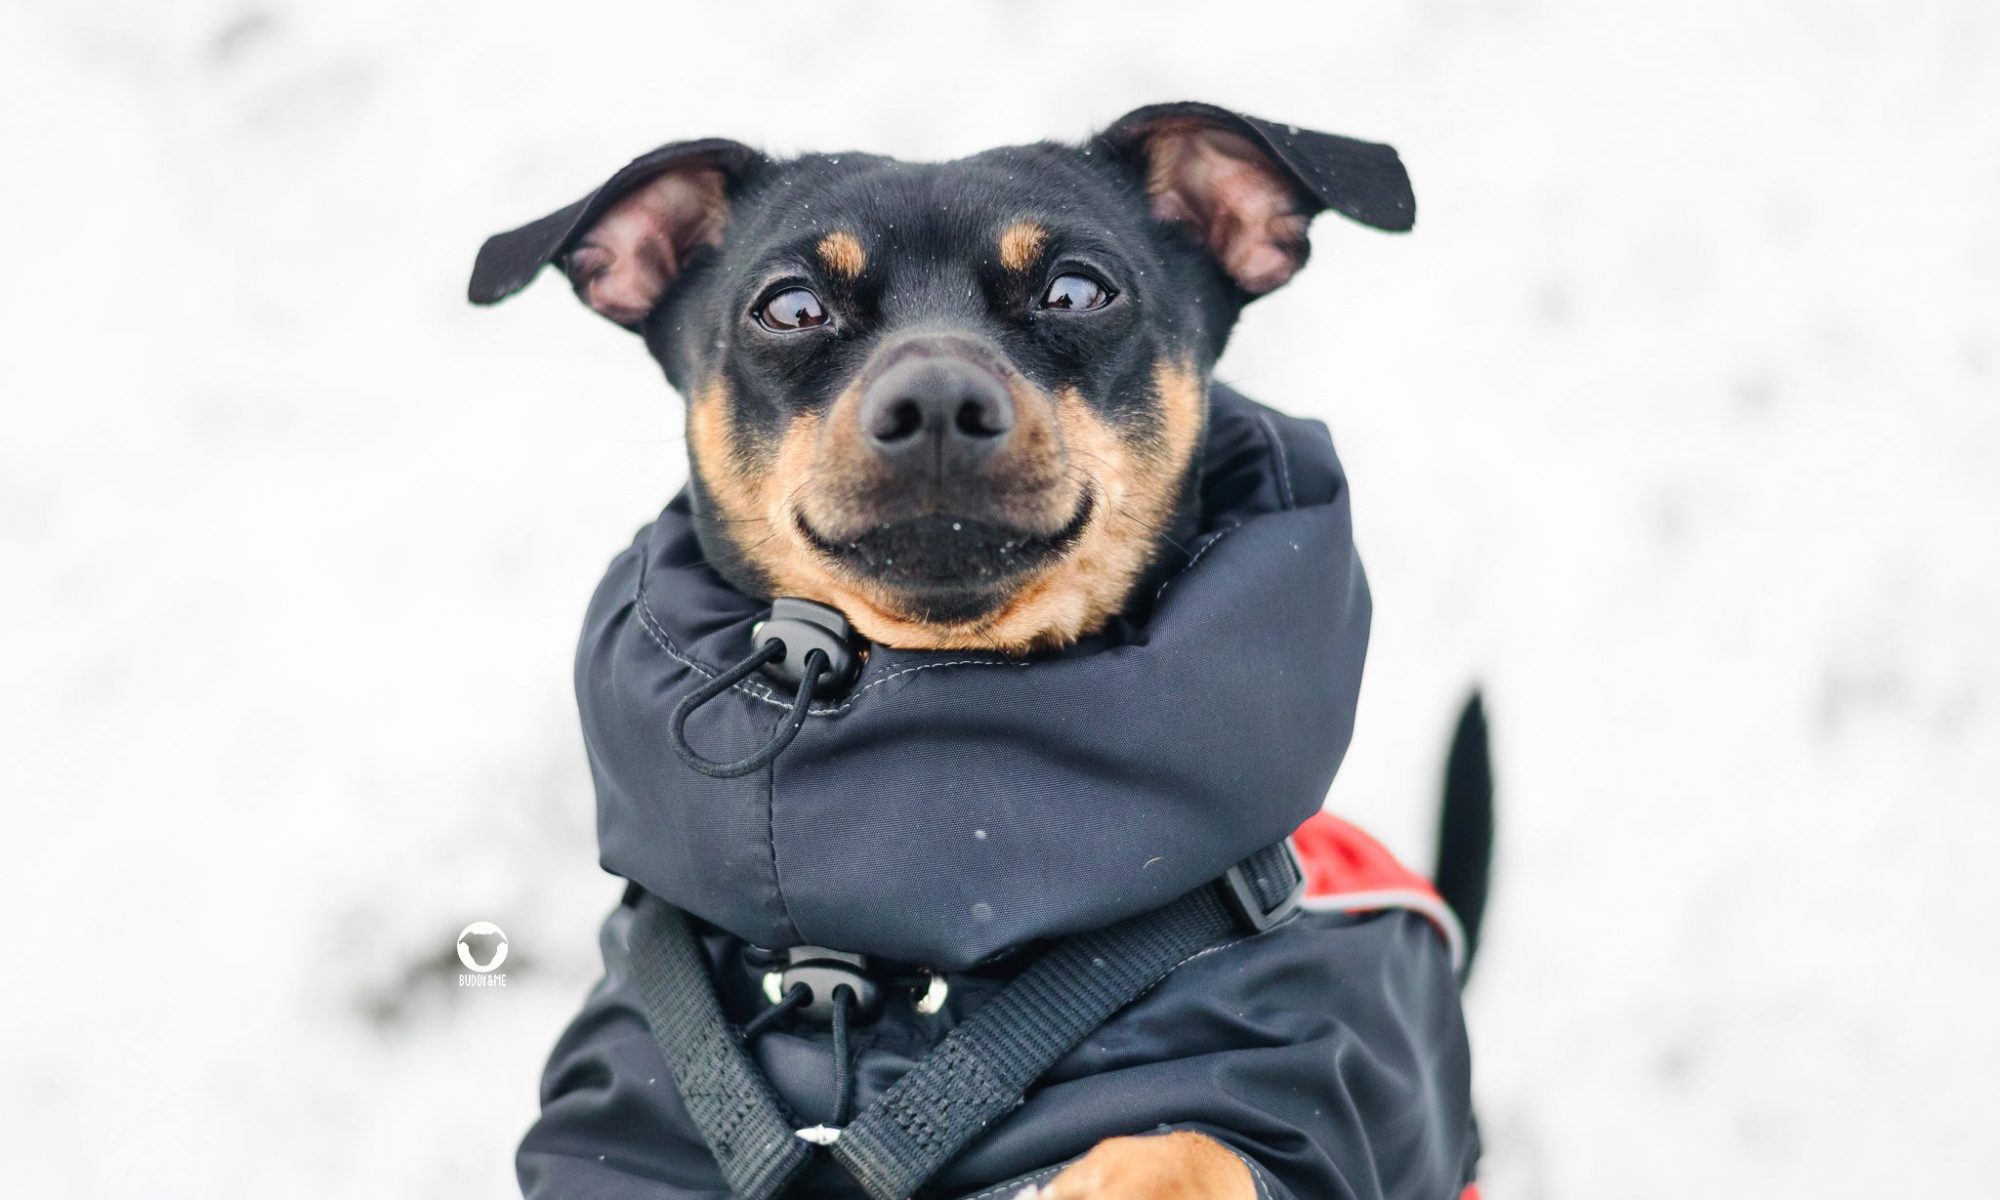 Pinscher Buddy, Buddy and Me, Hundeblog, Dogblog, Ruhrgebiet, Essen, kleine Hunde, Winter, Hundemantel, Schnee, 2019, Wald